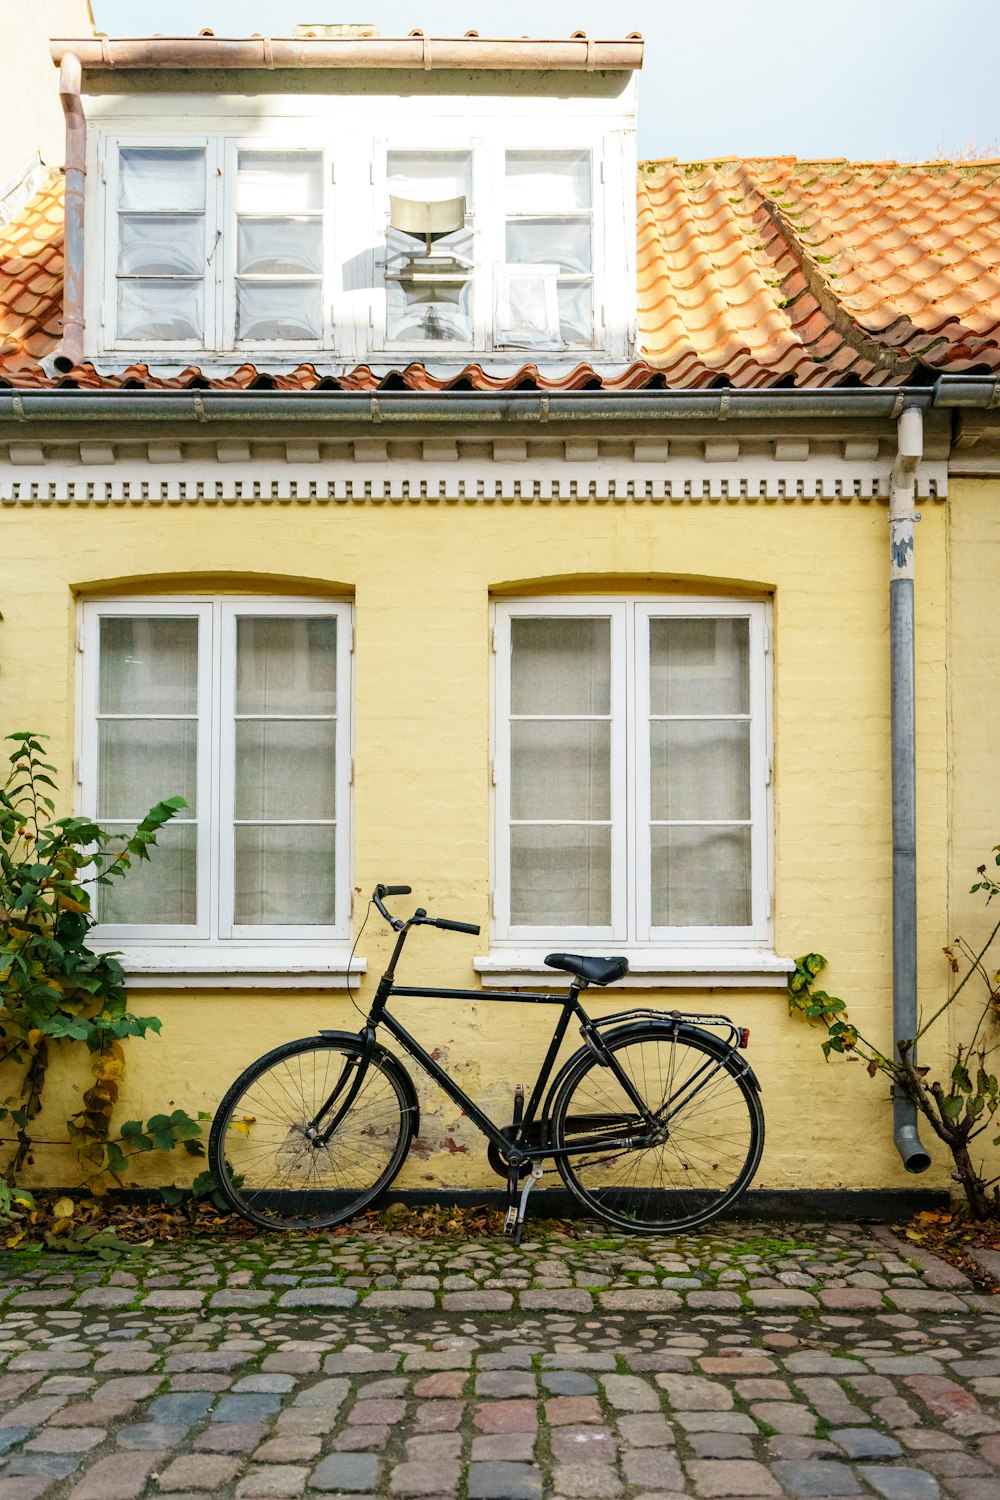 bicicleta preta estacionada ao lado da casa pintada de amarelo